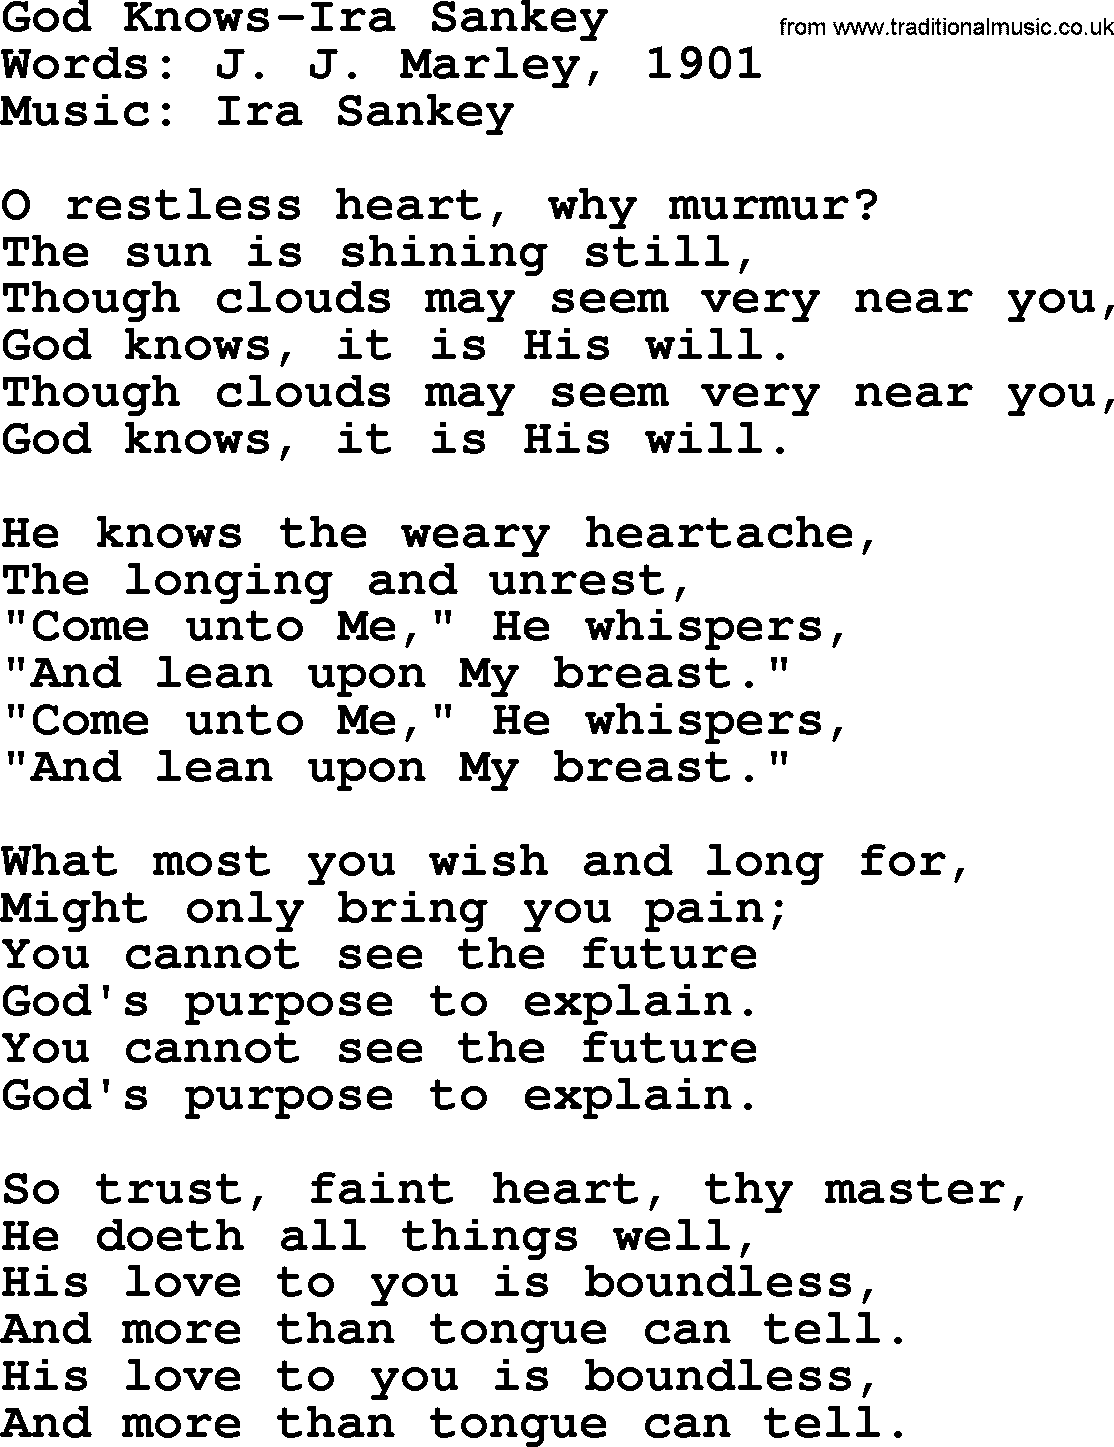 Ira Sankey hymn: God Knows-Ira Sankey, lyrics